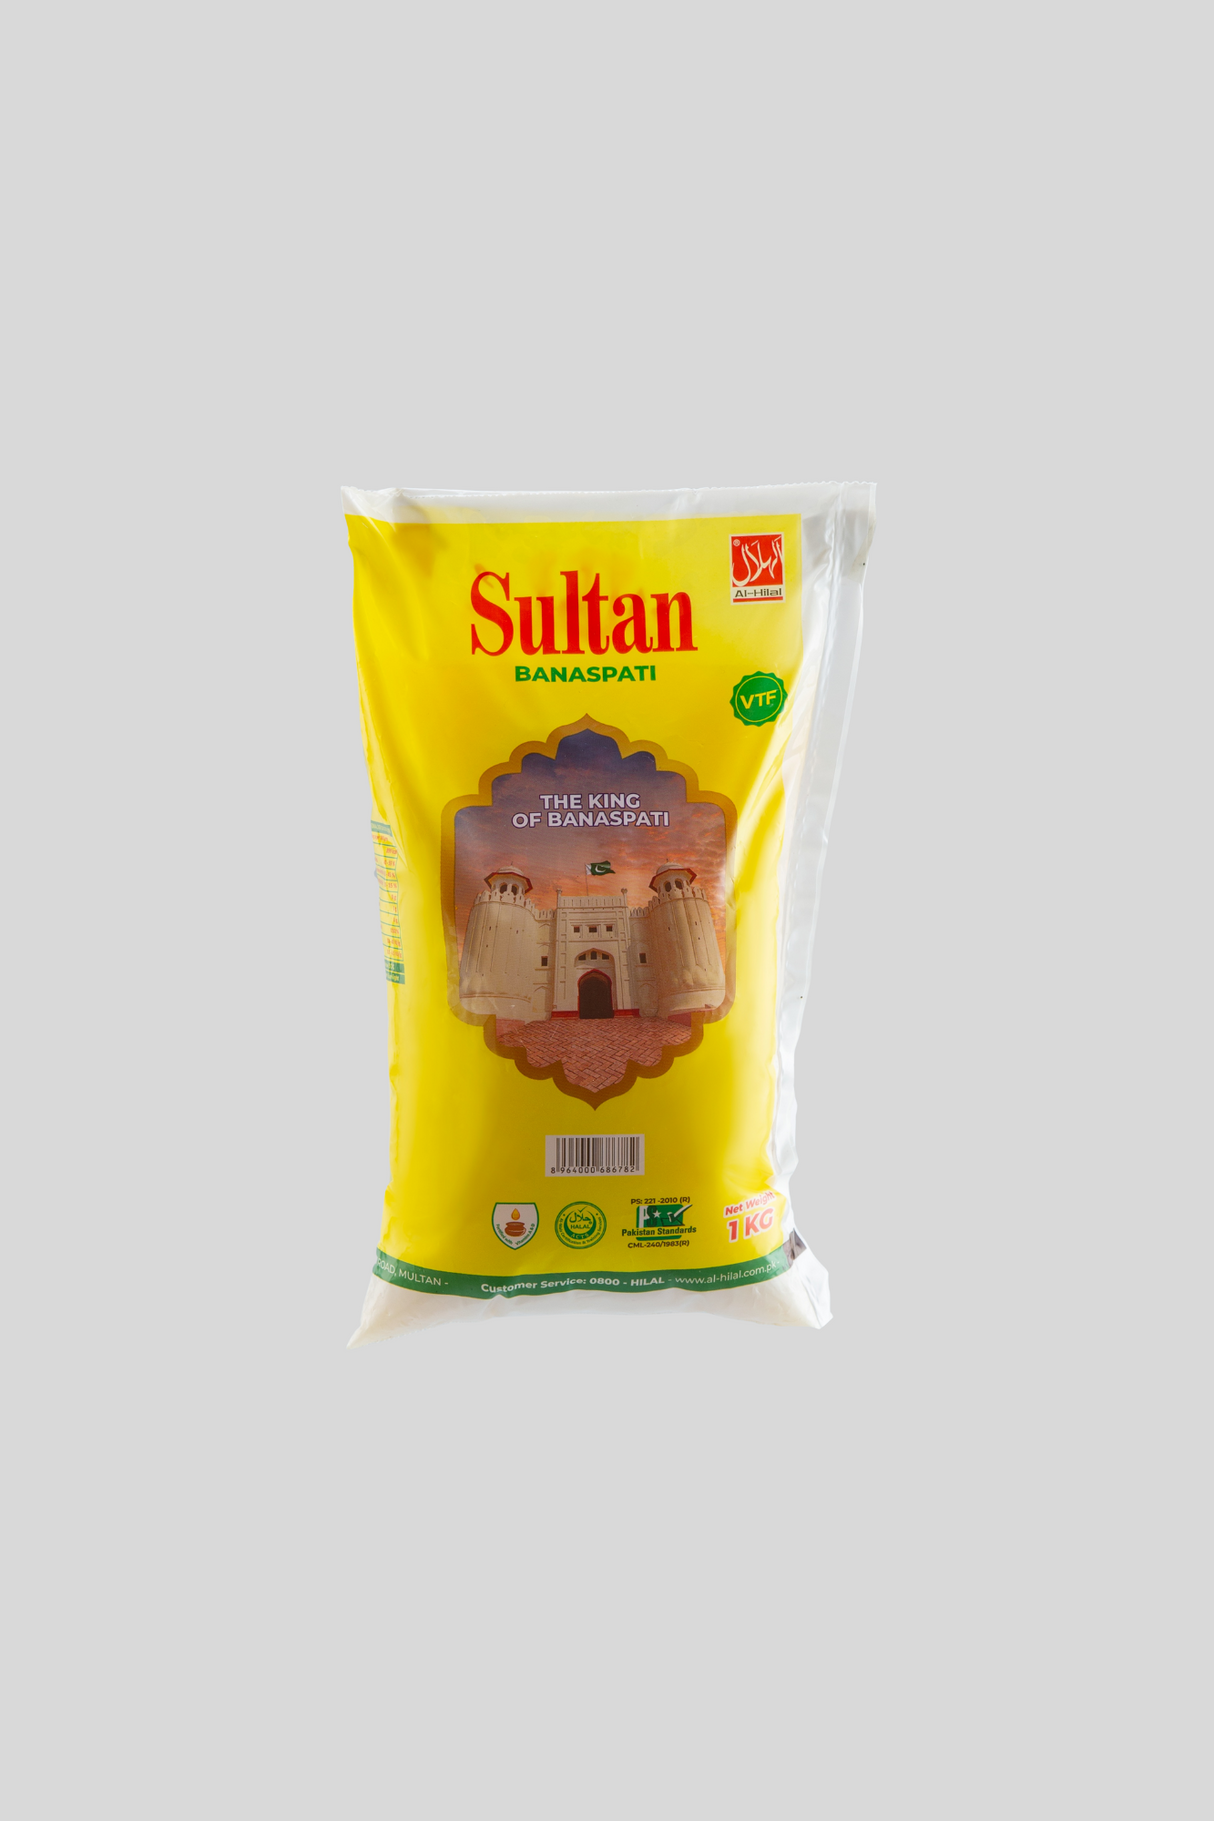 sultan banaspati 1kg